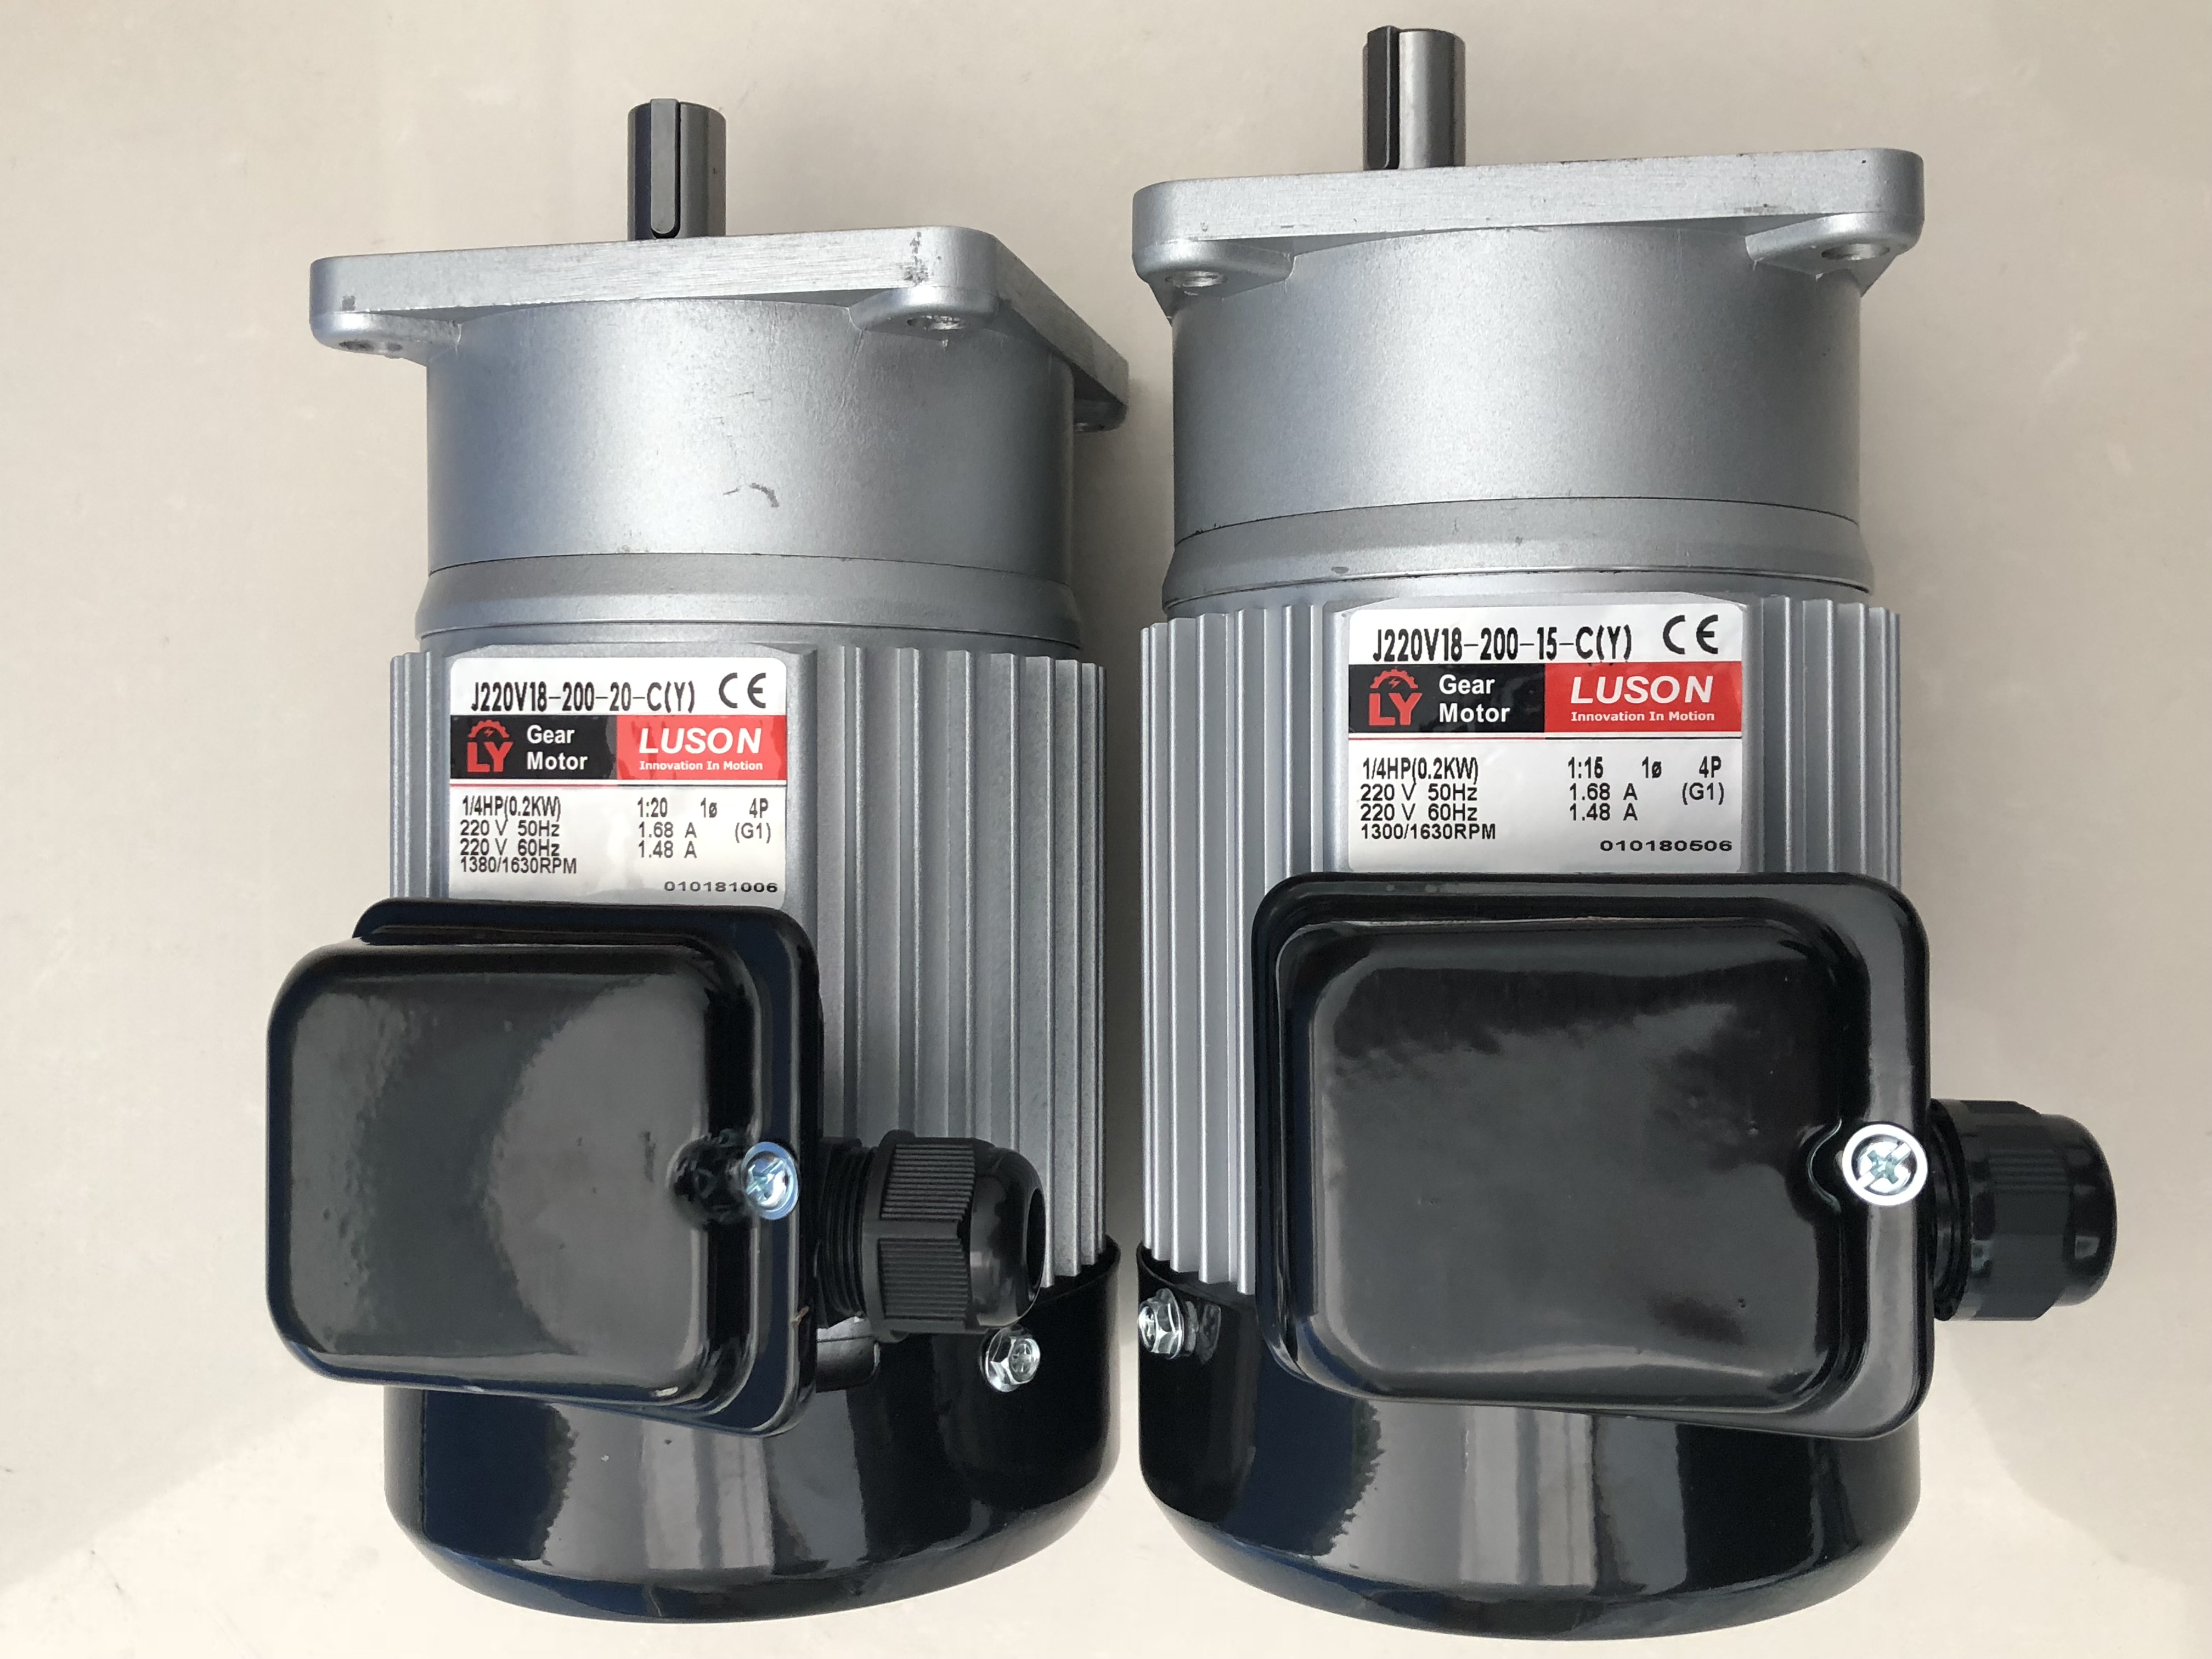 LUSON such as Yang sealing machine J220V15-200-15-S3 J230V18-200-20-C(Y) packing motor